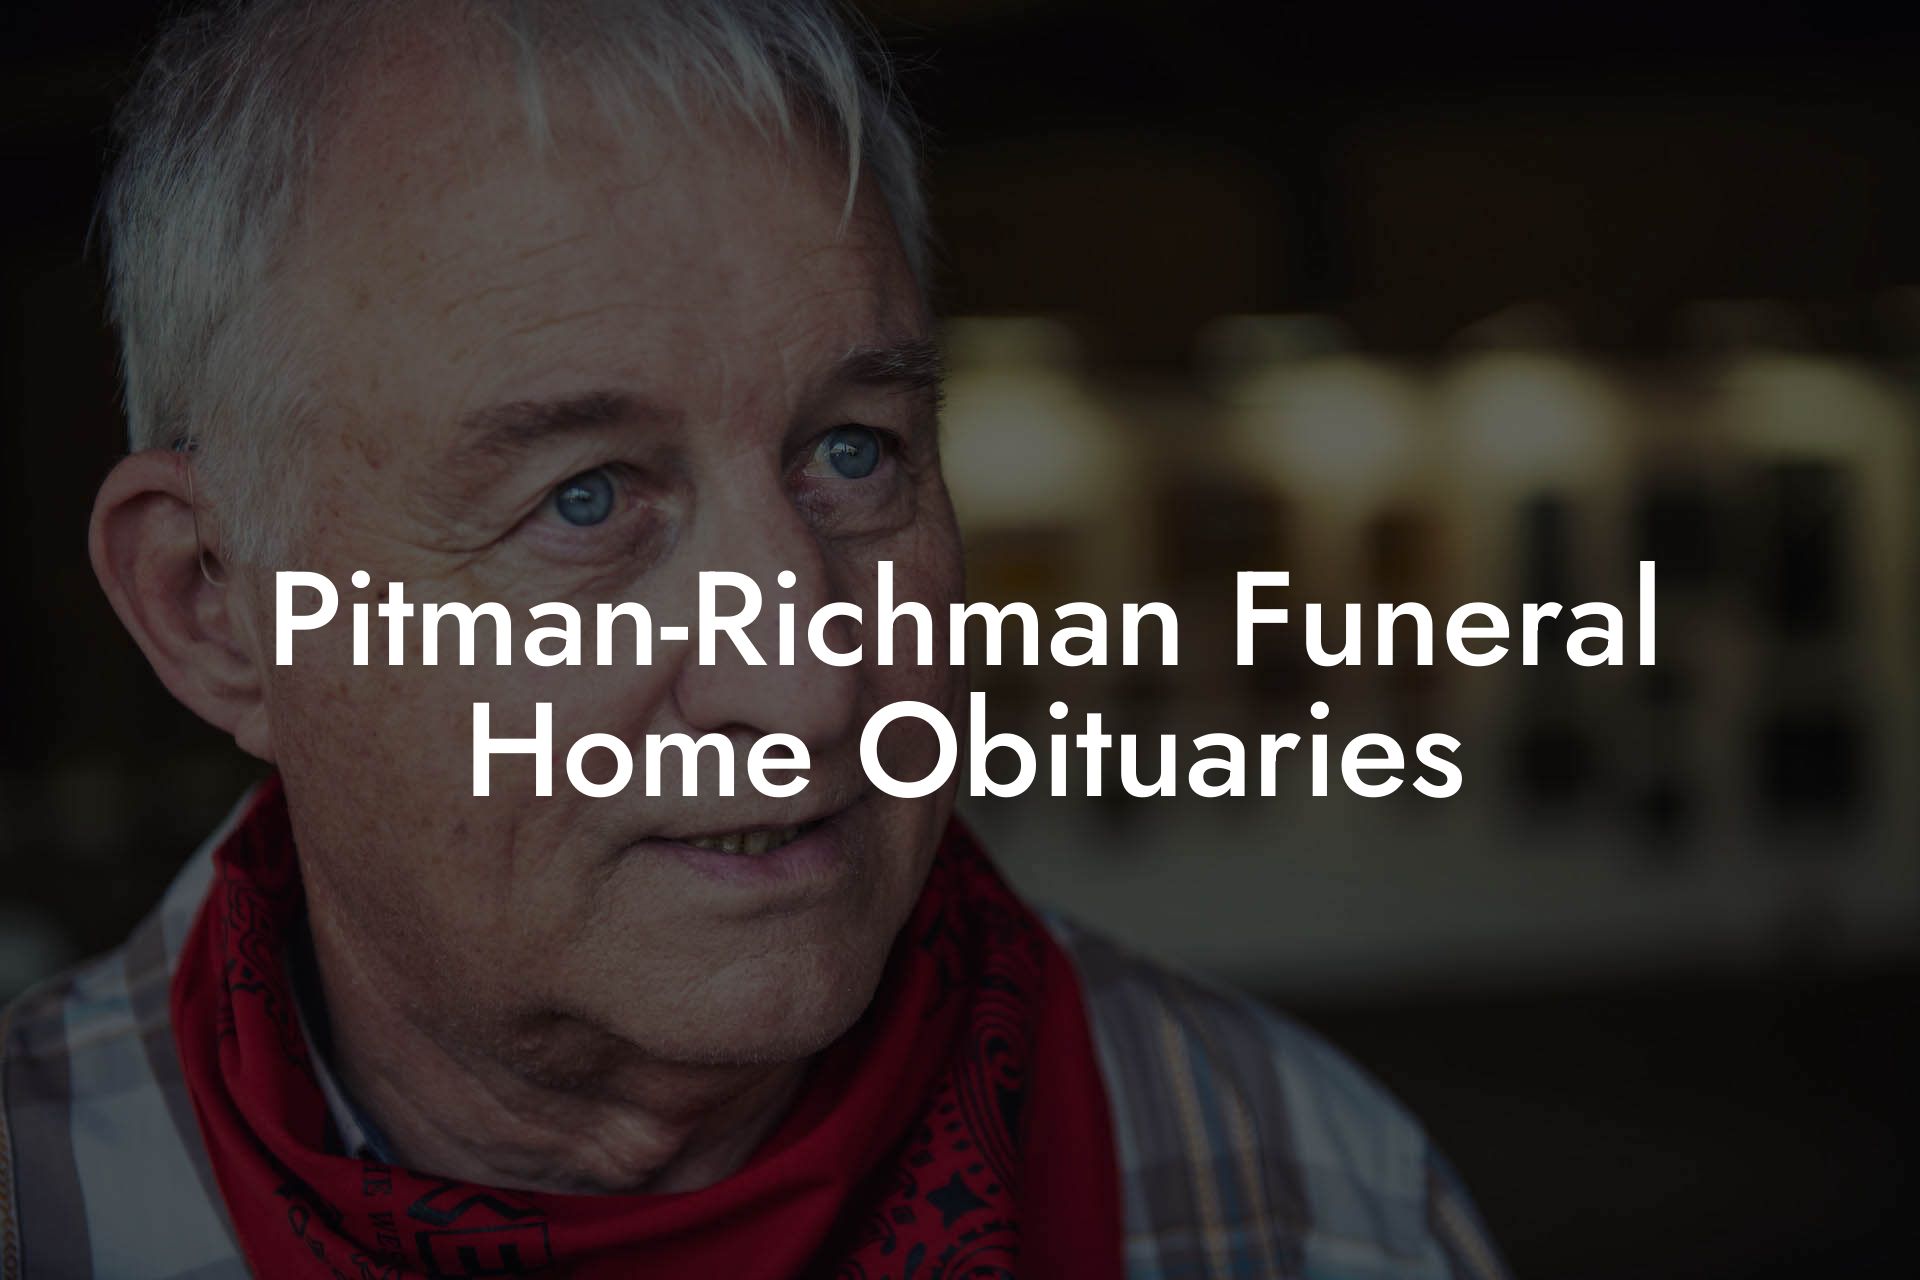 Pitman-Richman Funeral Home Obituaries